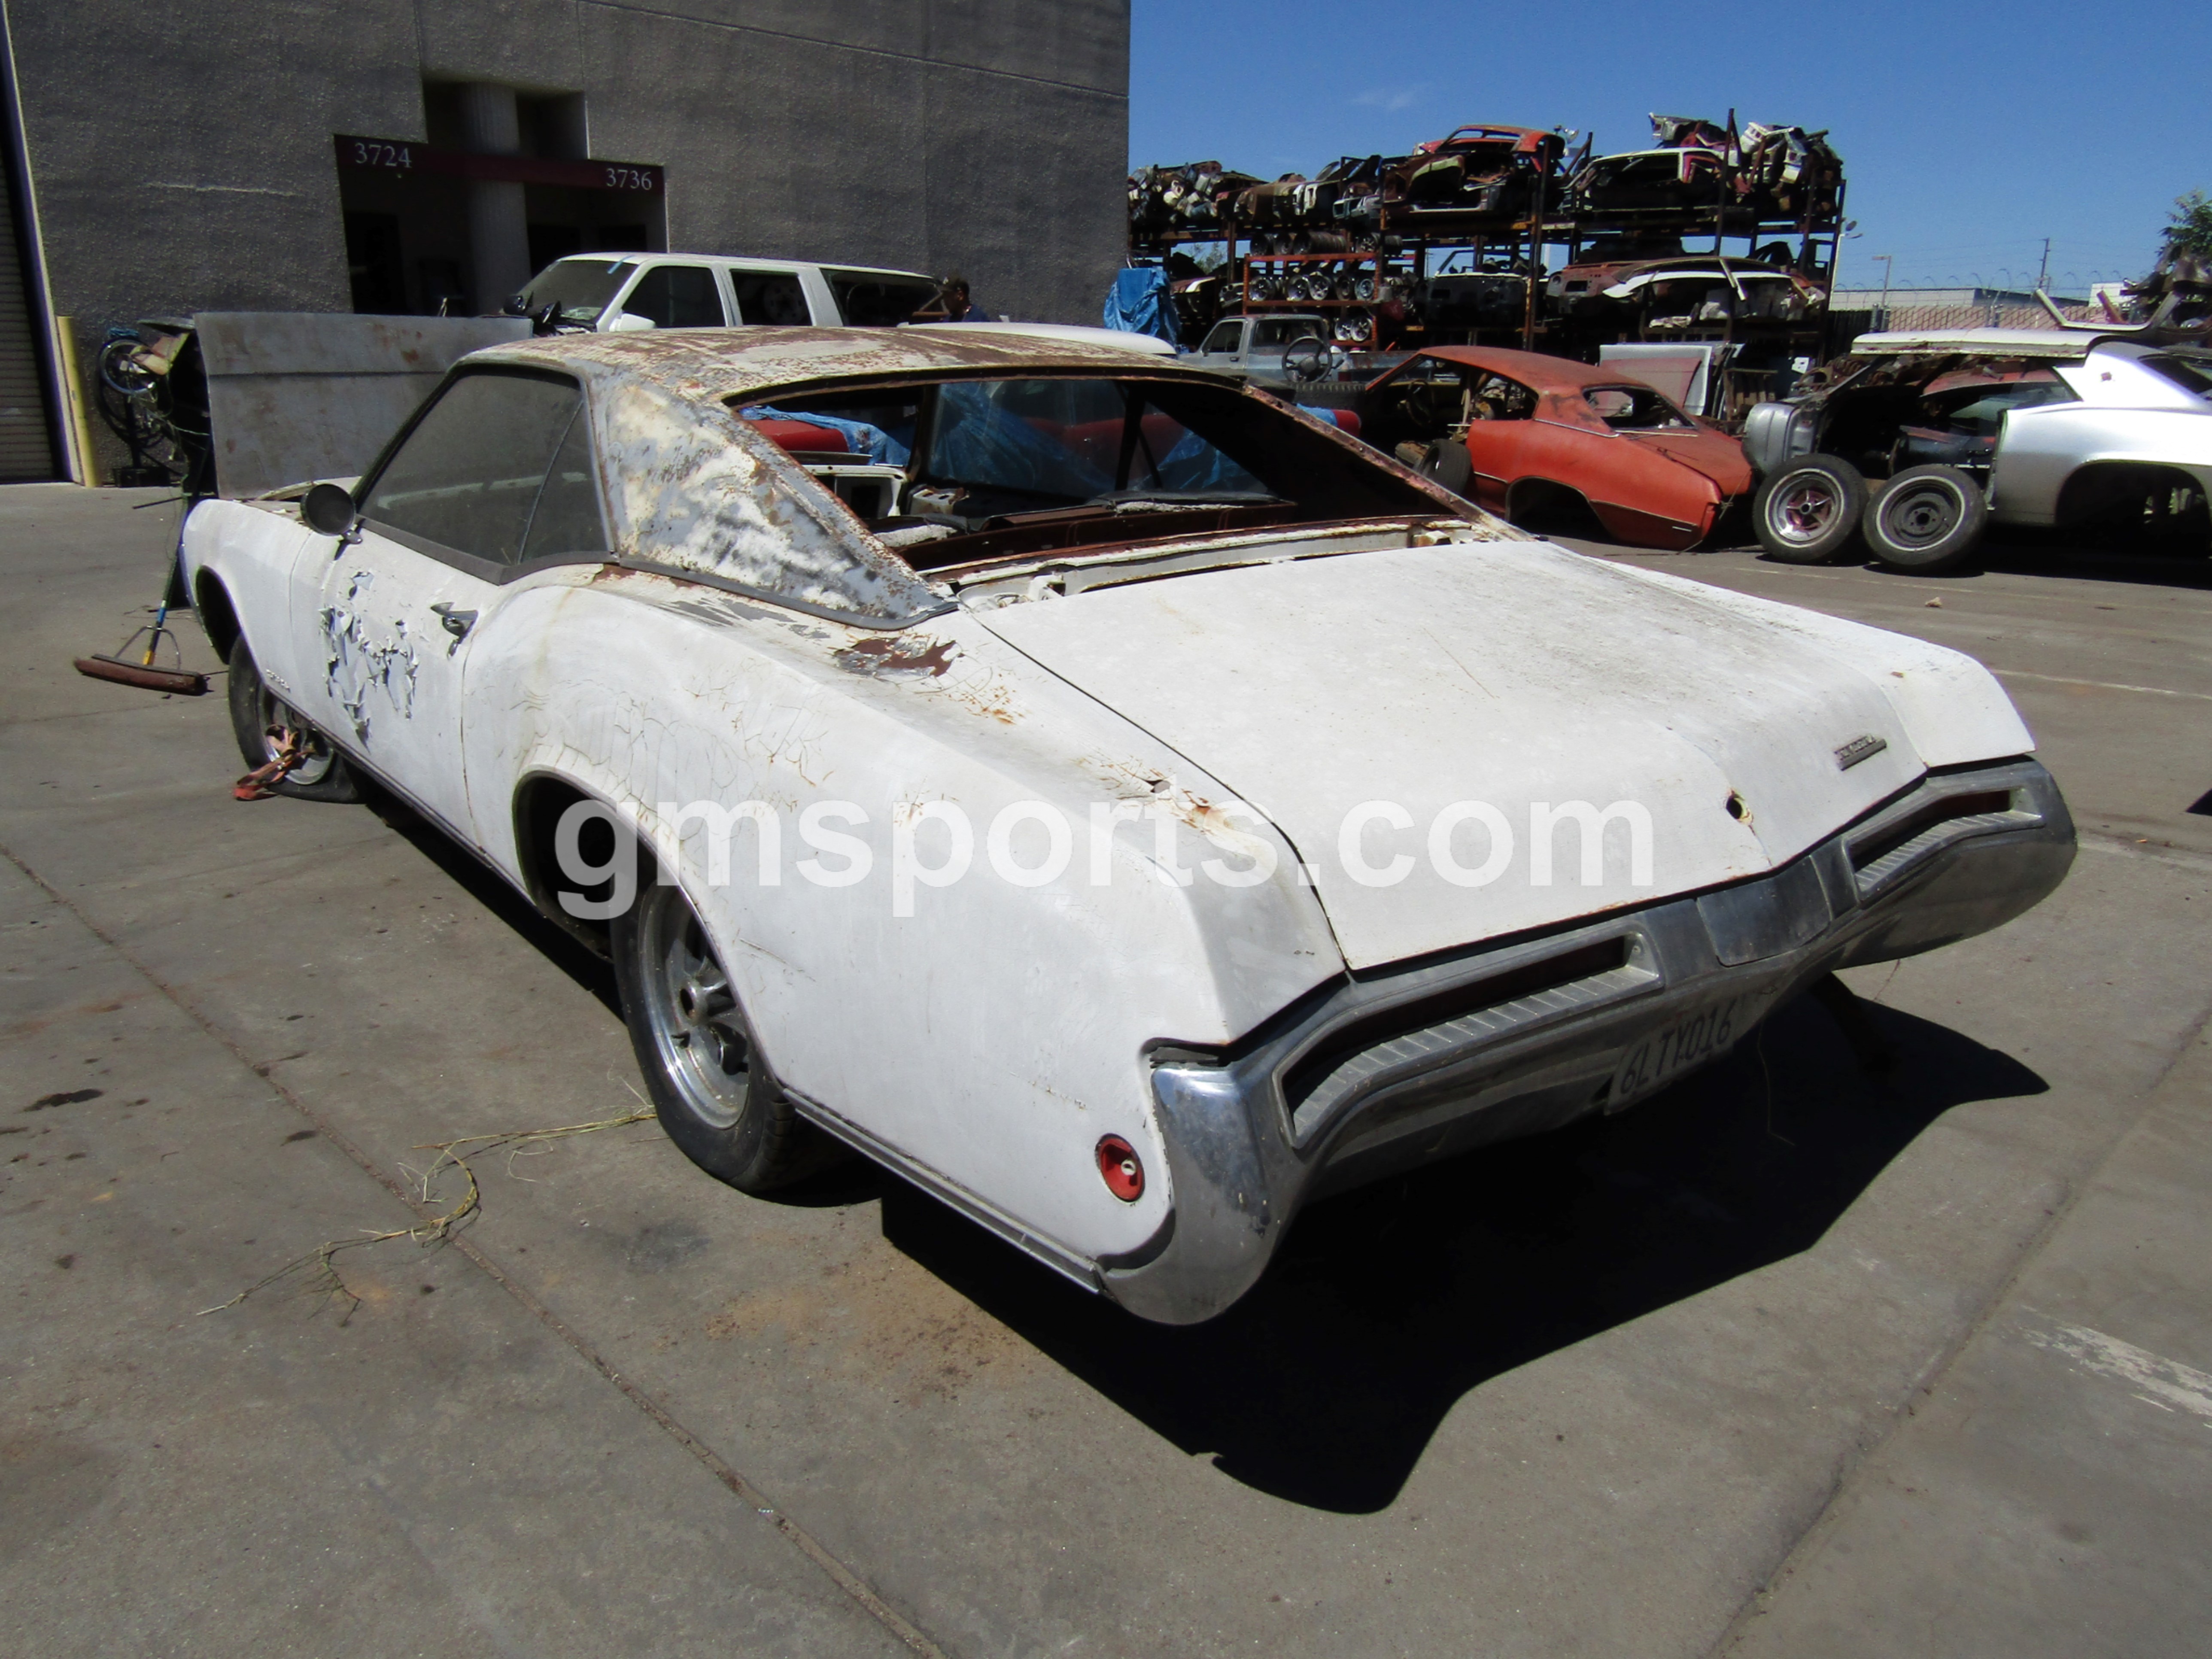 1968, 1969, Buick, Rivera,door,left,right,fender,quarter,roof,glass,frame,front,rear,bumper,suspnsion,moldings,